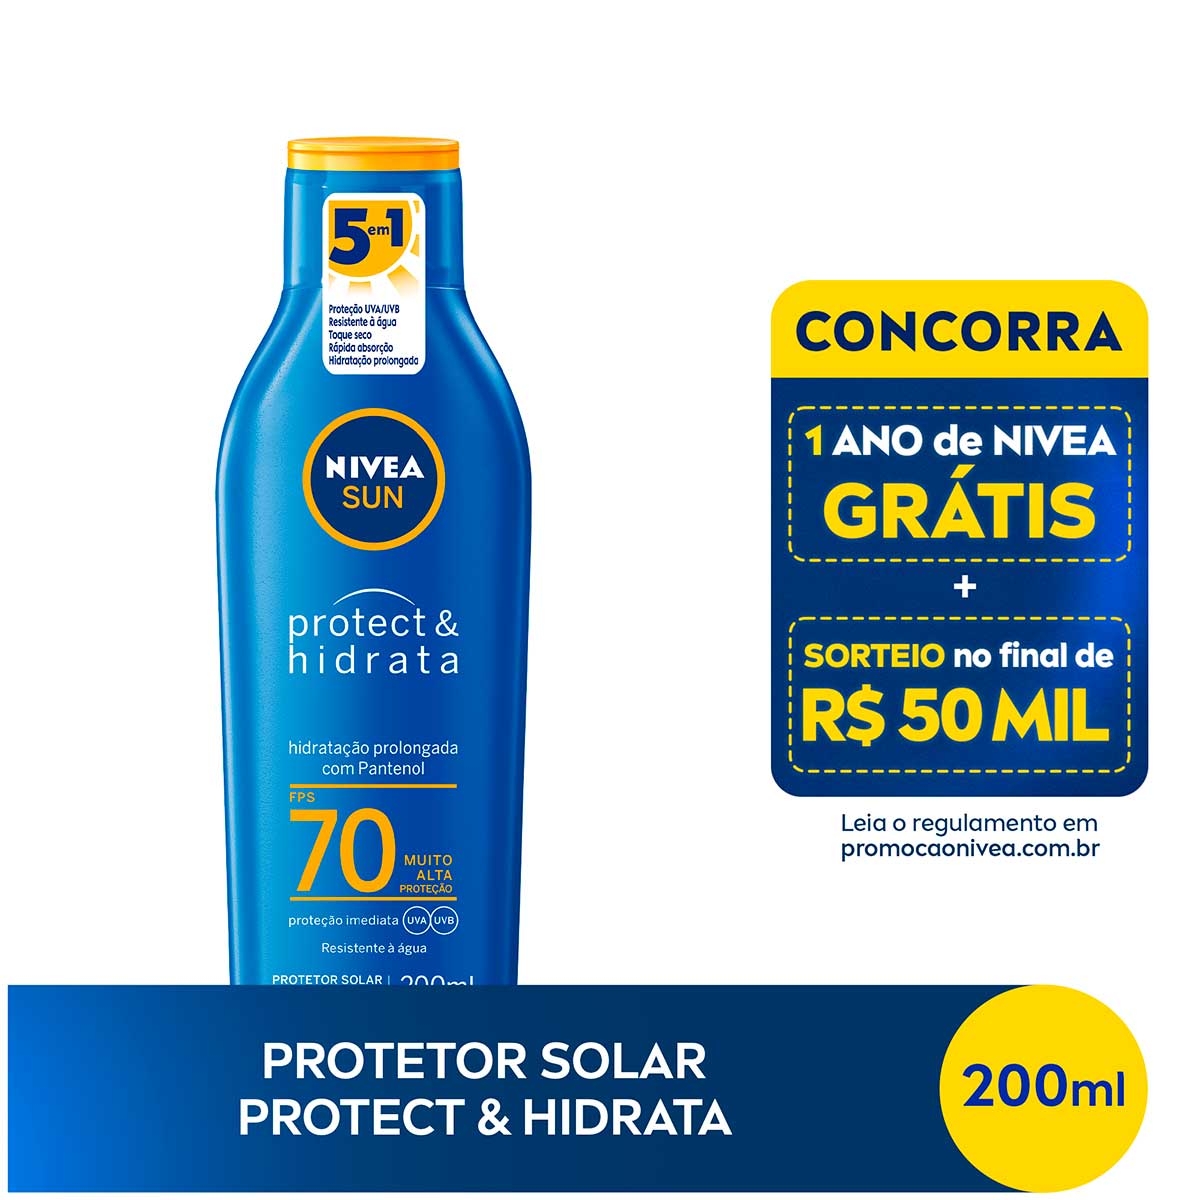 Protetor Solar Nivea Sun Protect & Hidrata FPS 70 com 200ml 200ml